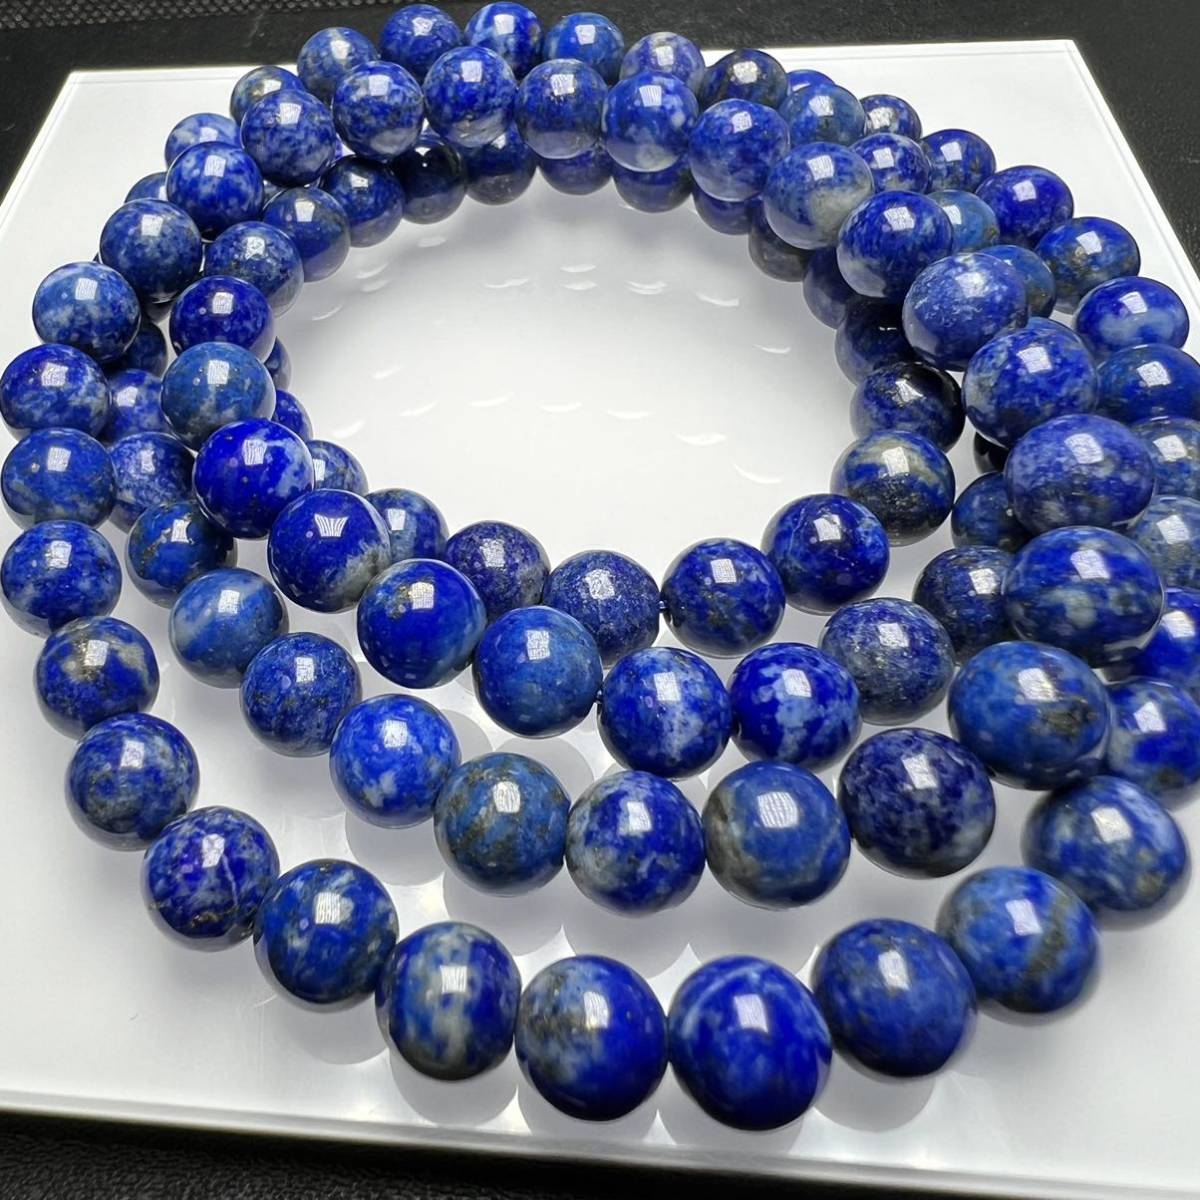  high quality natural lapis lazuli 7.5mm 2 ream minute 76cm bracele 4 pcs minute 